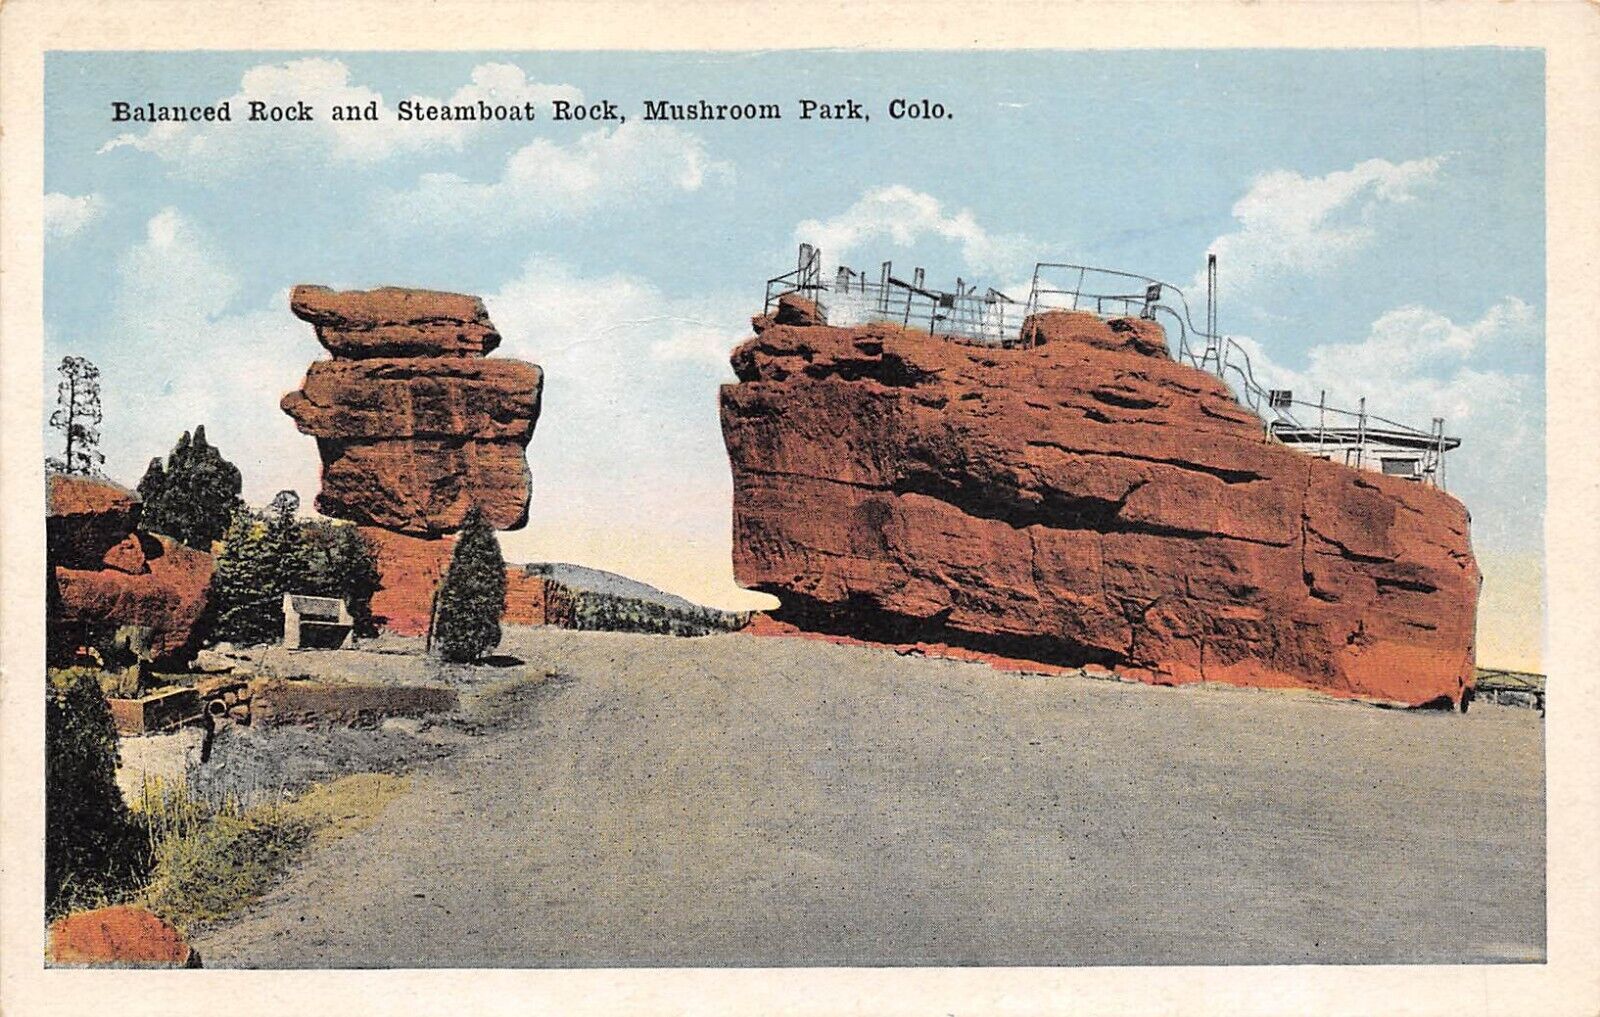 Mushroom Park Colorado 1920s Postcard Balanced Rock and Steamboat Rock